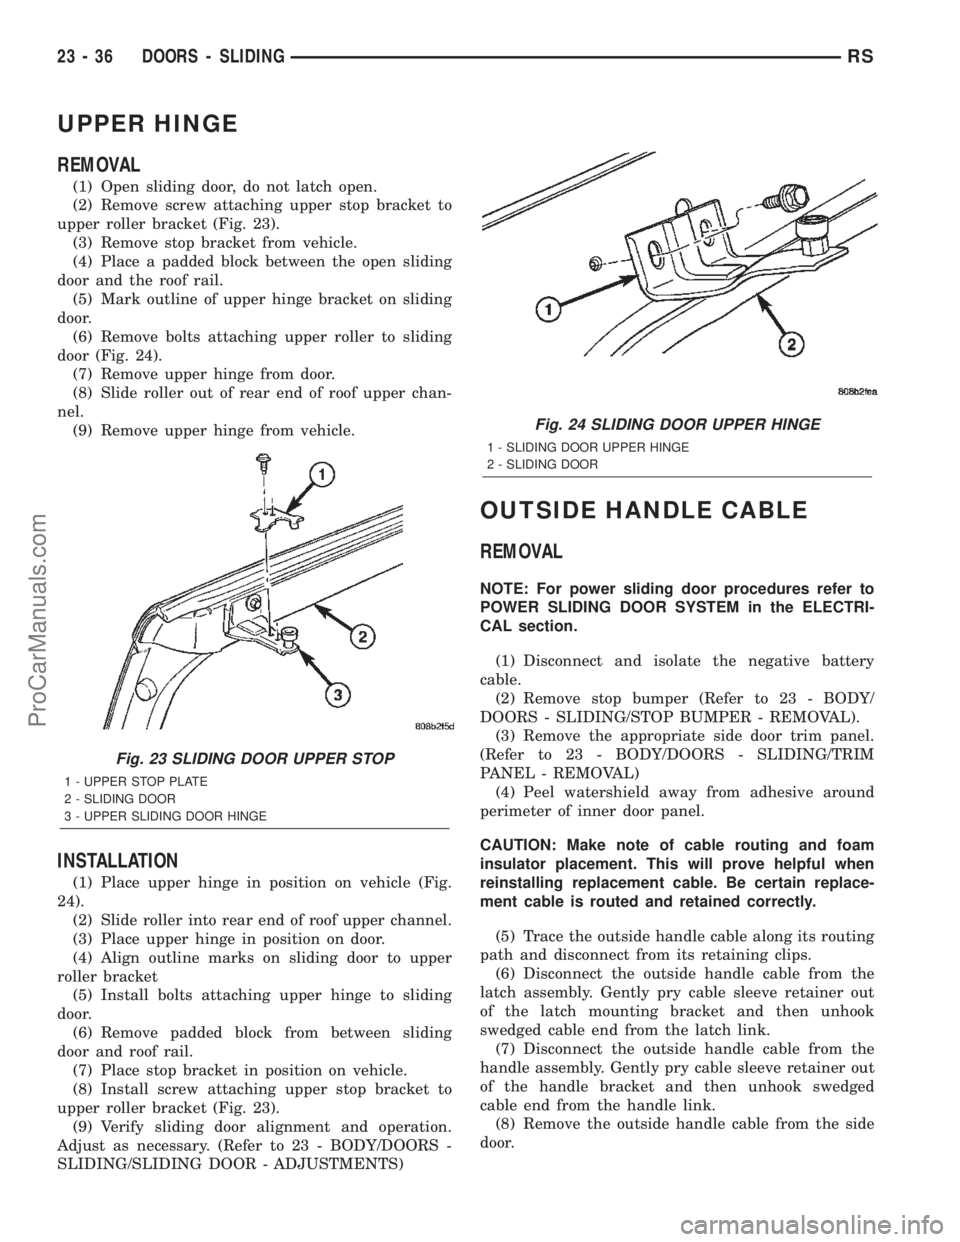 CHRYSLER CARAVAN 2002  Service Manual UPPER HINGE
REMOVAL
(1) Open sliding door, do not latch open.
(2) Remove screw attaching upper stop bracket to
upper roller bracket (Fig. 23).
(3) Remove stop bracket from vehicle.
(4) Place a padded 